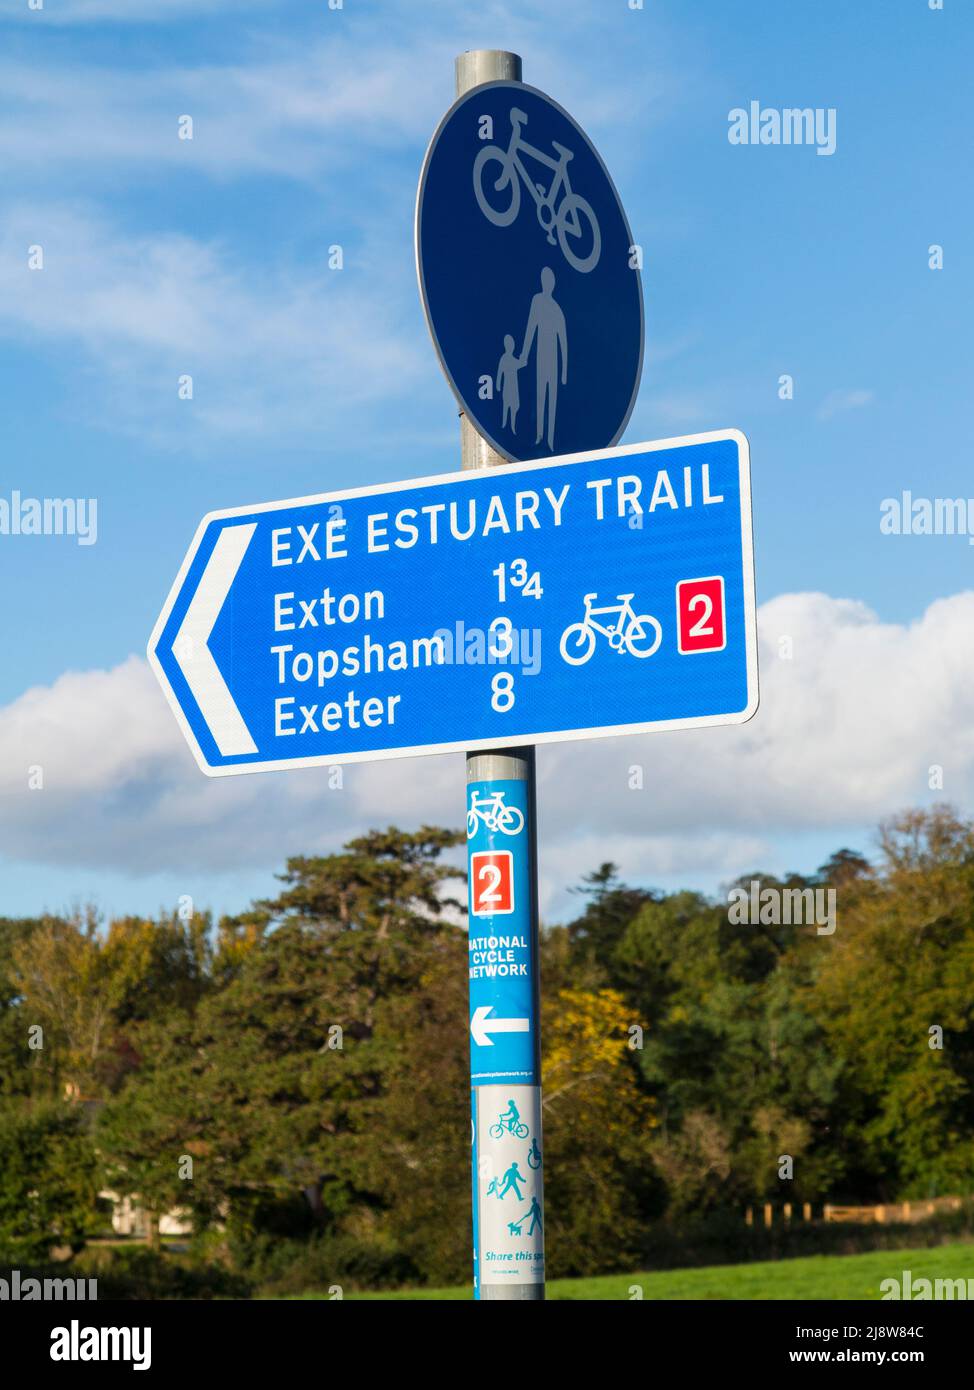 Exe Estuary cycle trail sign near Topsham, Devon, UK Stock Photo